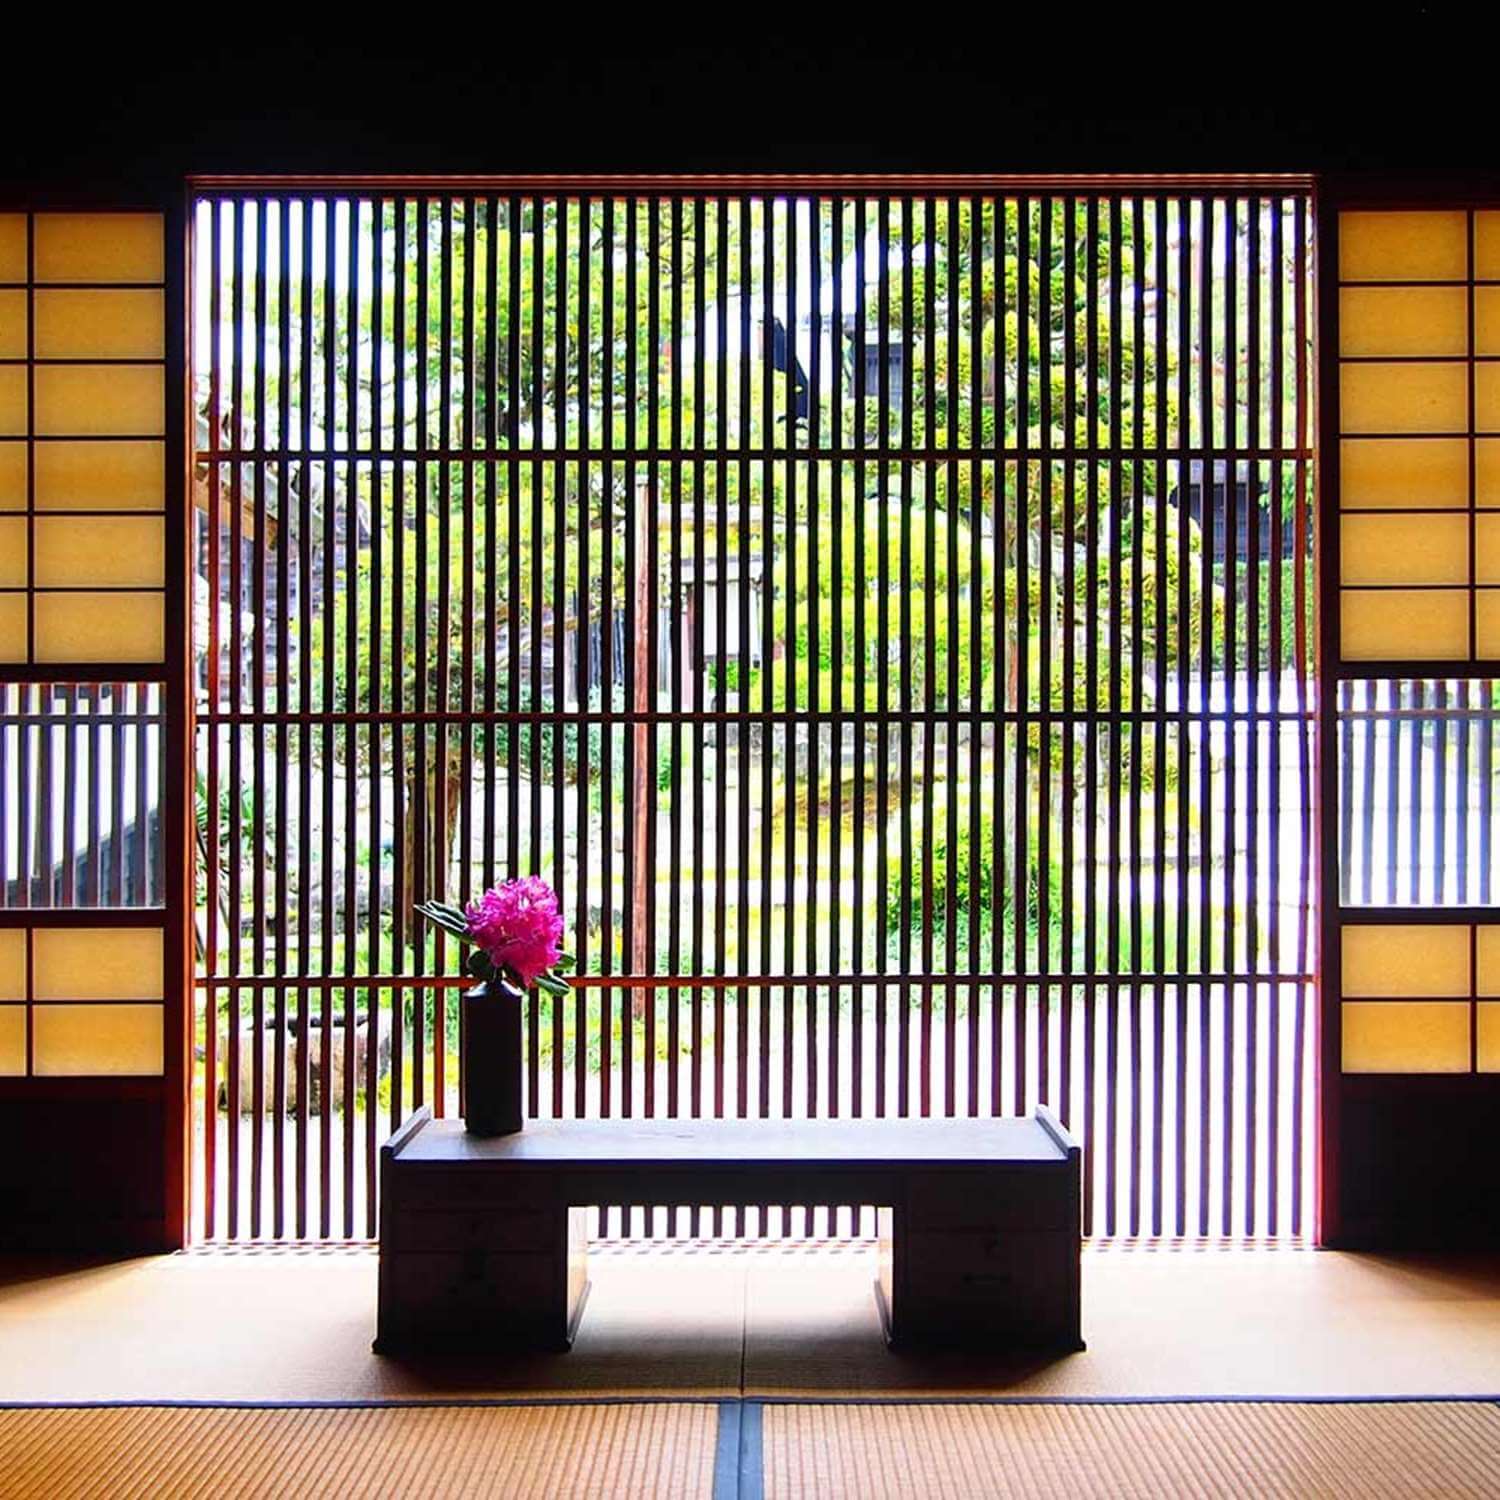 Japanese garden seen from the room = AdobeStock 10